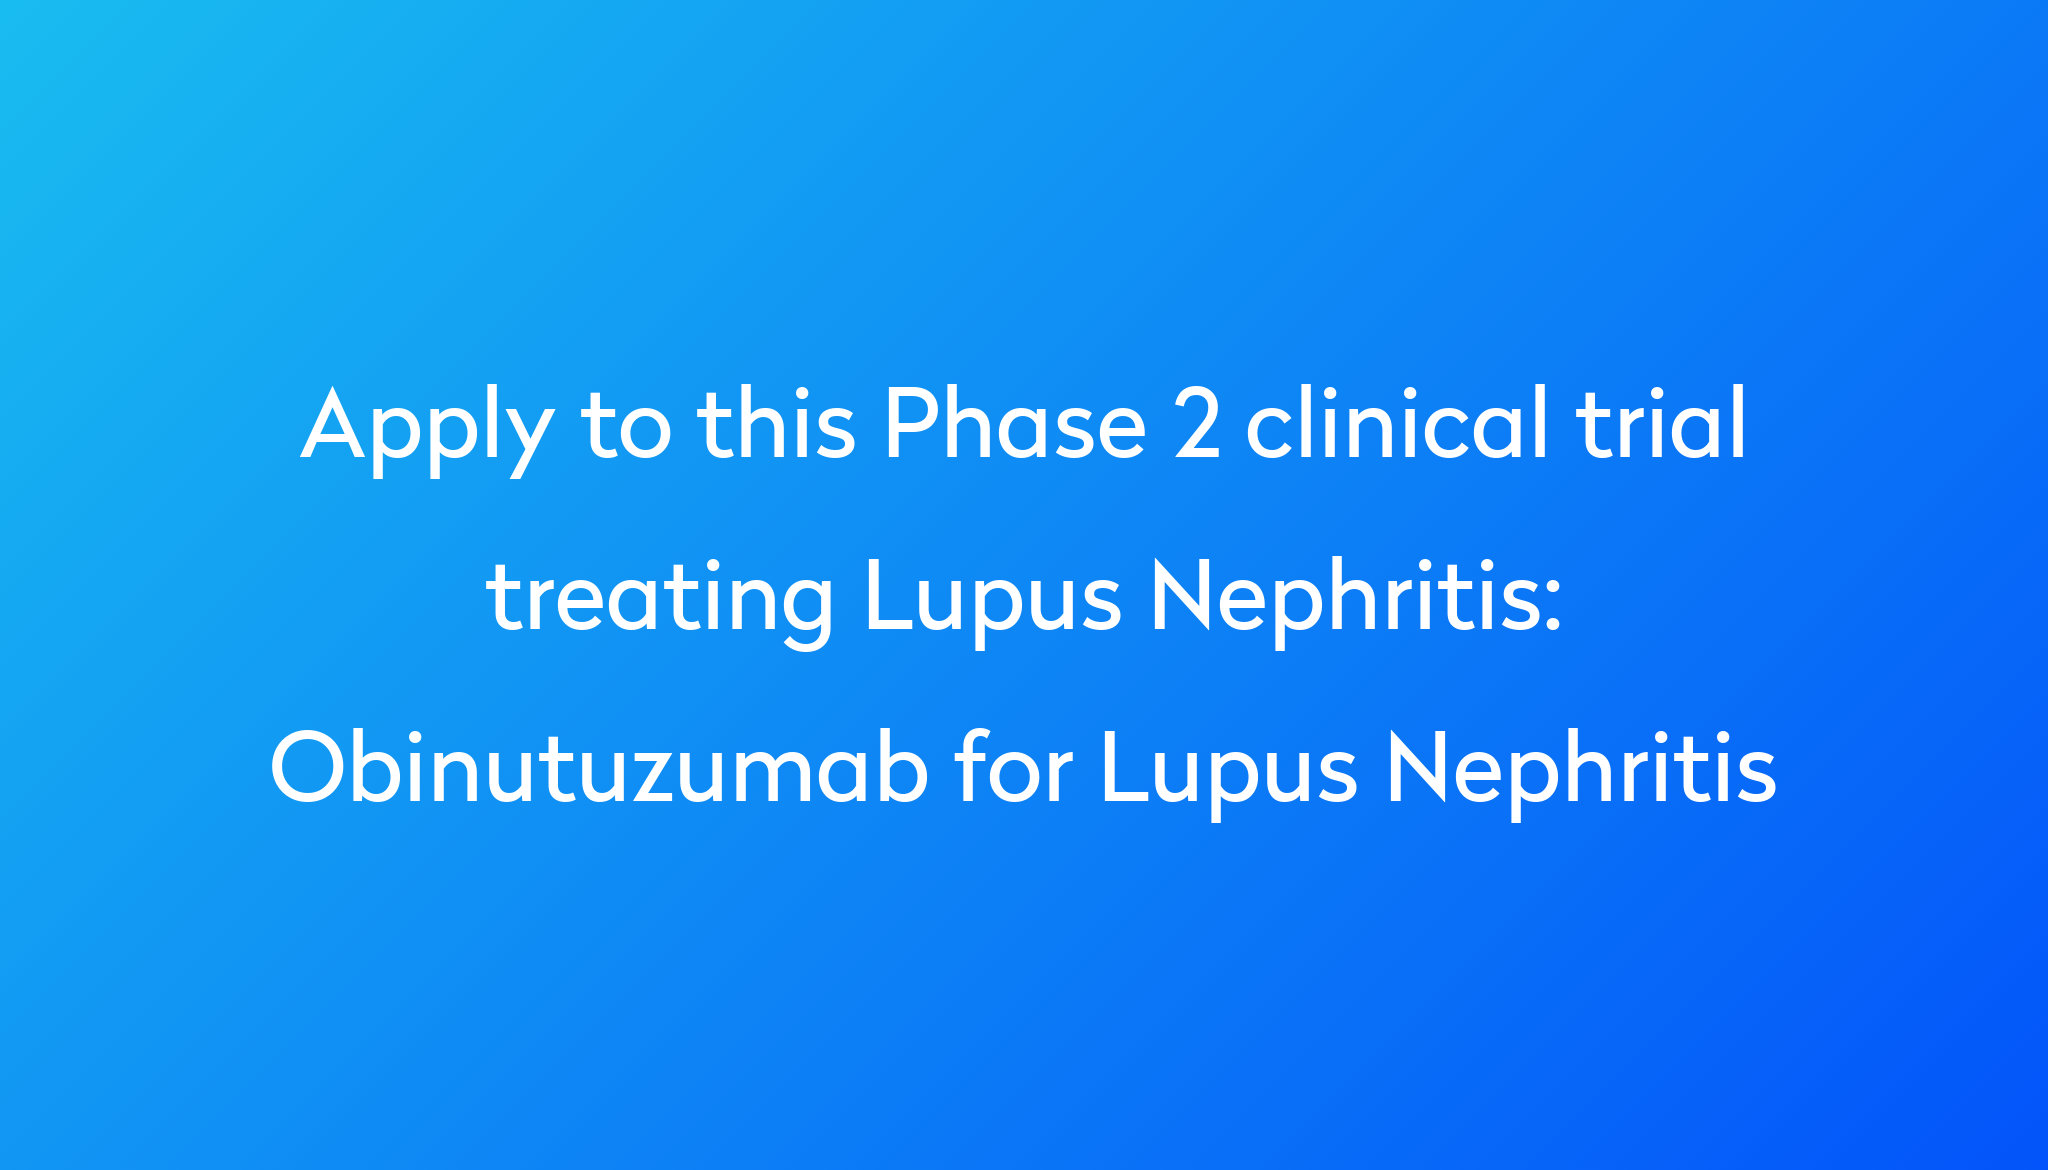 obinutuzumab-for-lupus-nephritis-clinical-trial-2024-power